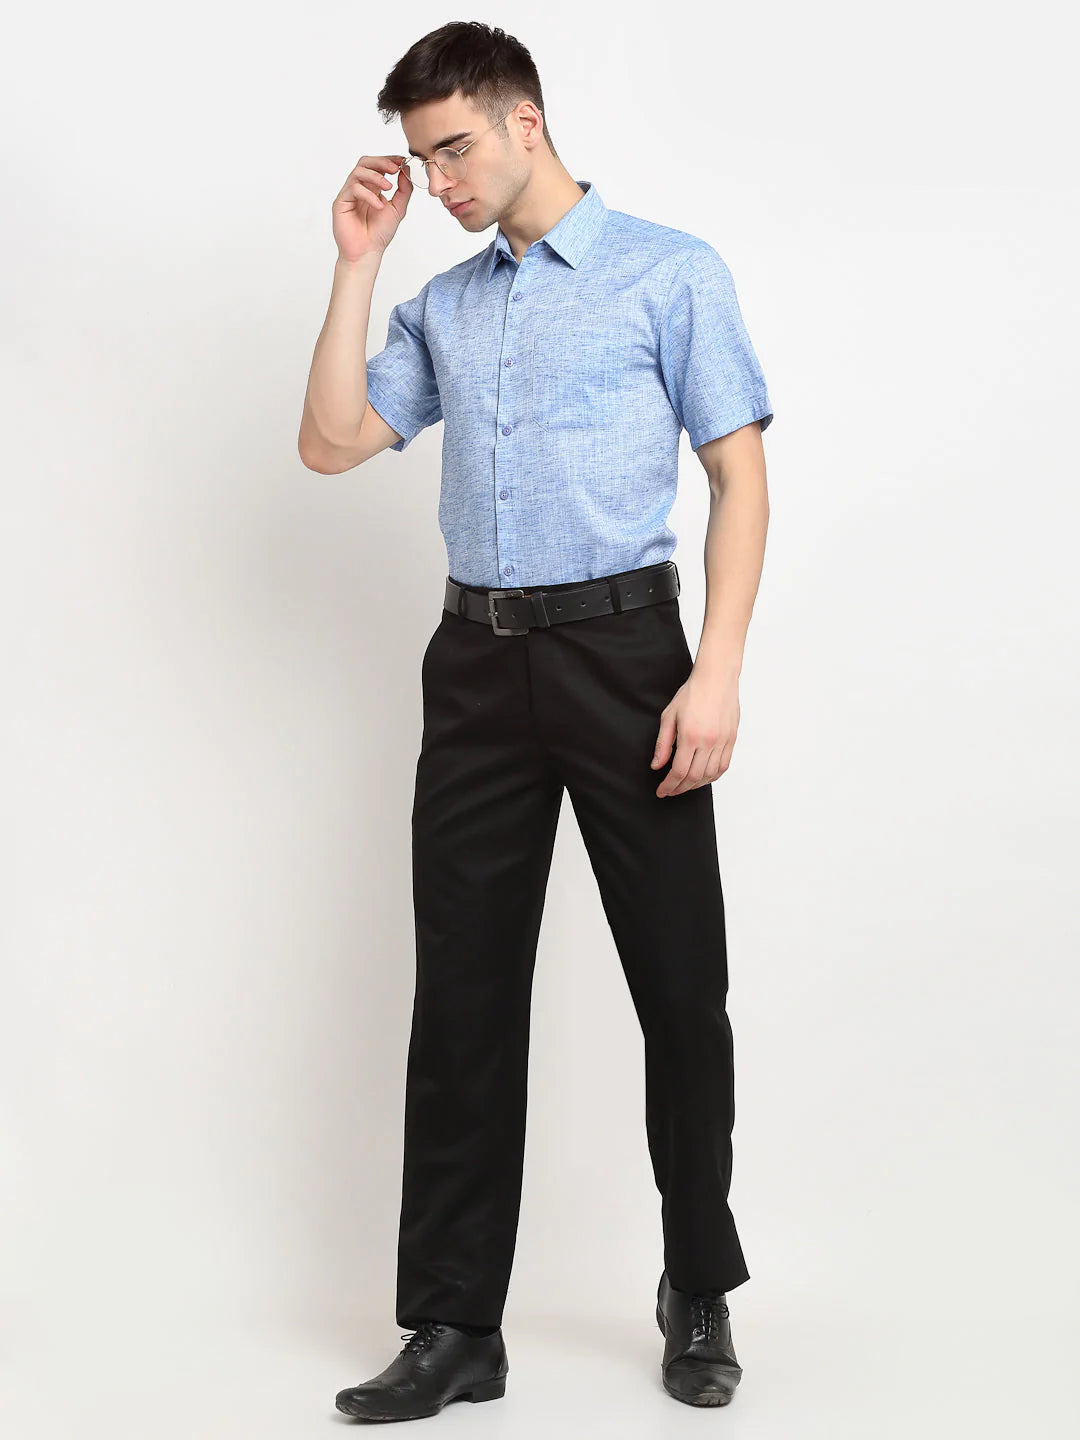 Jainish Blue Men's Solid Cotton Half Sleeves Formal Shirt ( SF 783Blue )